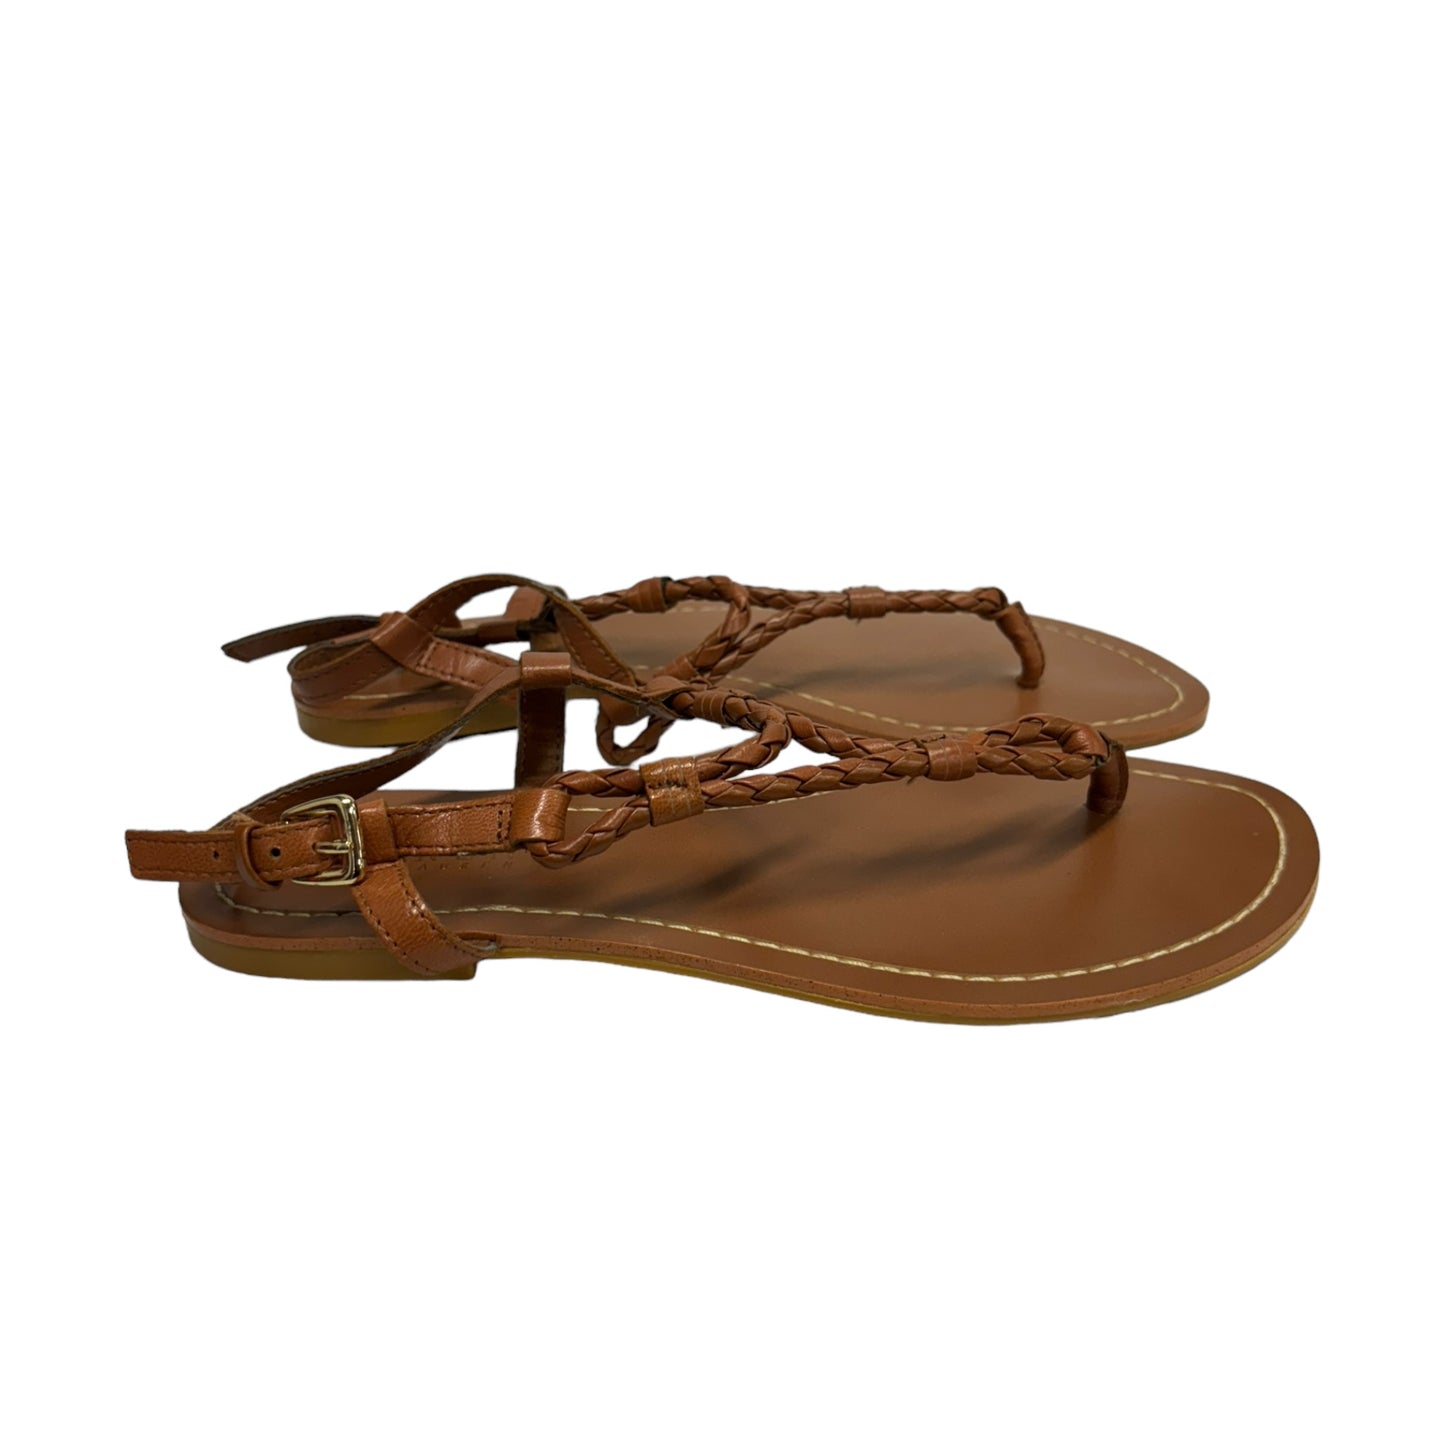 Sandals Flats By Lauren By Ralph Lauren  Size: 7.5